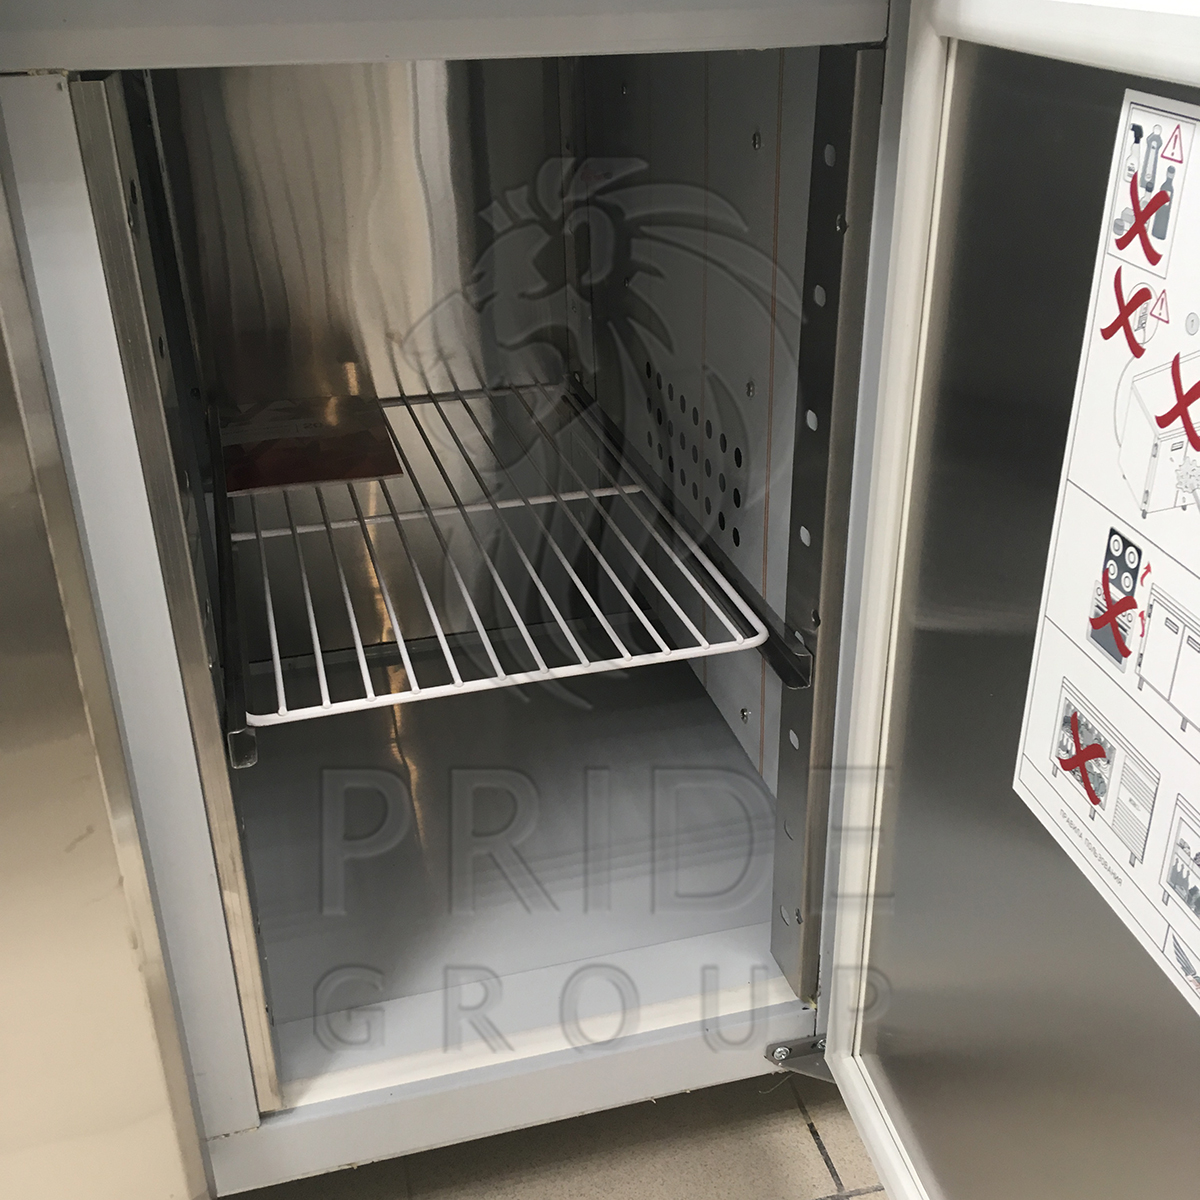 Стол холодильный для пиццы Finist СХСпц-700-4 2300х700х850 мм